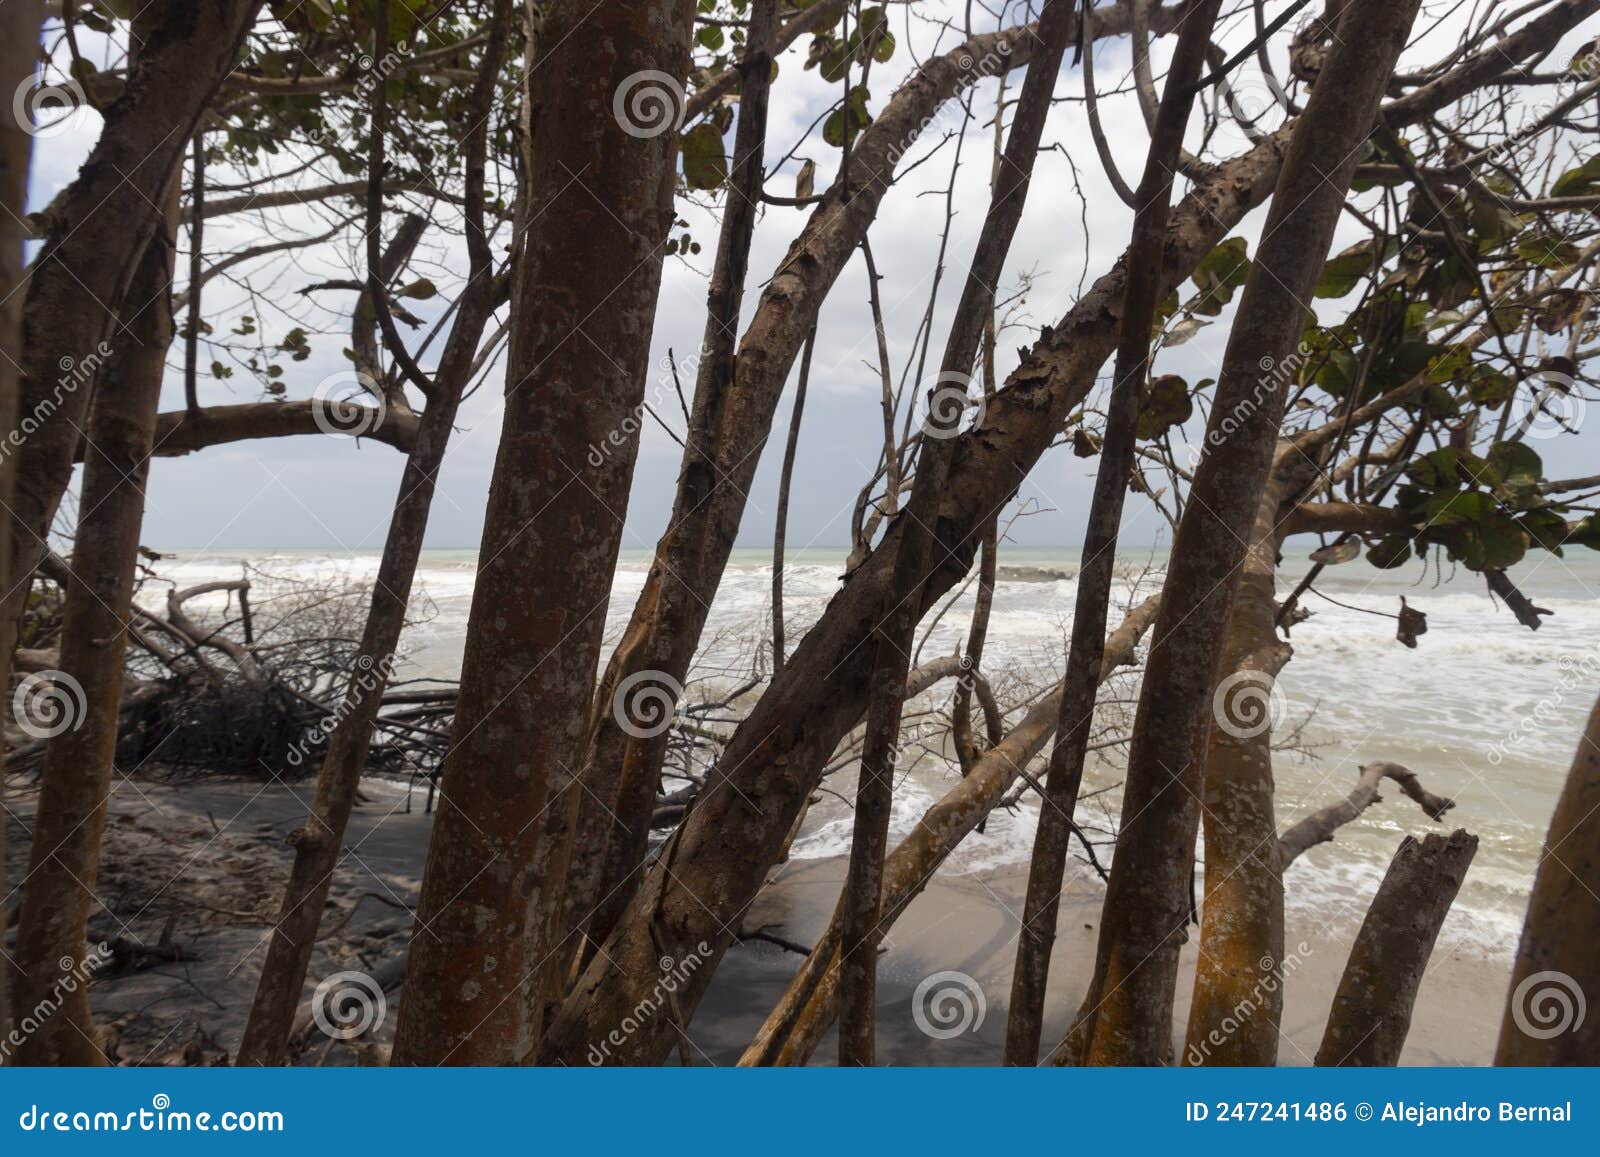 manglar plants and trunks near to seashore at colombian beach